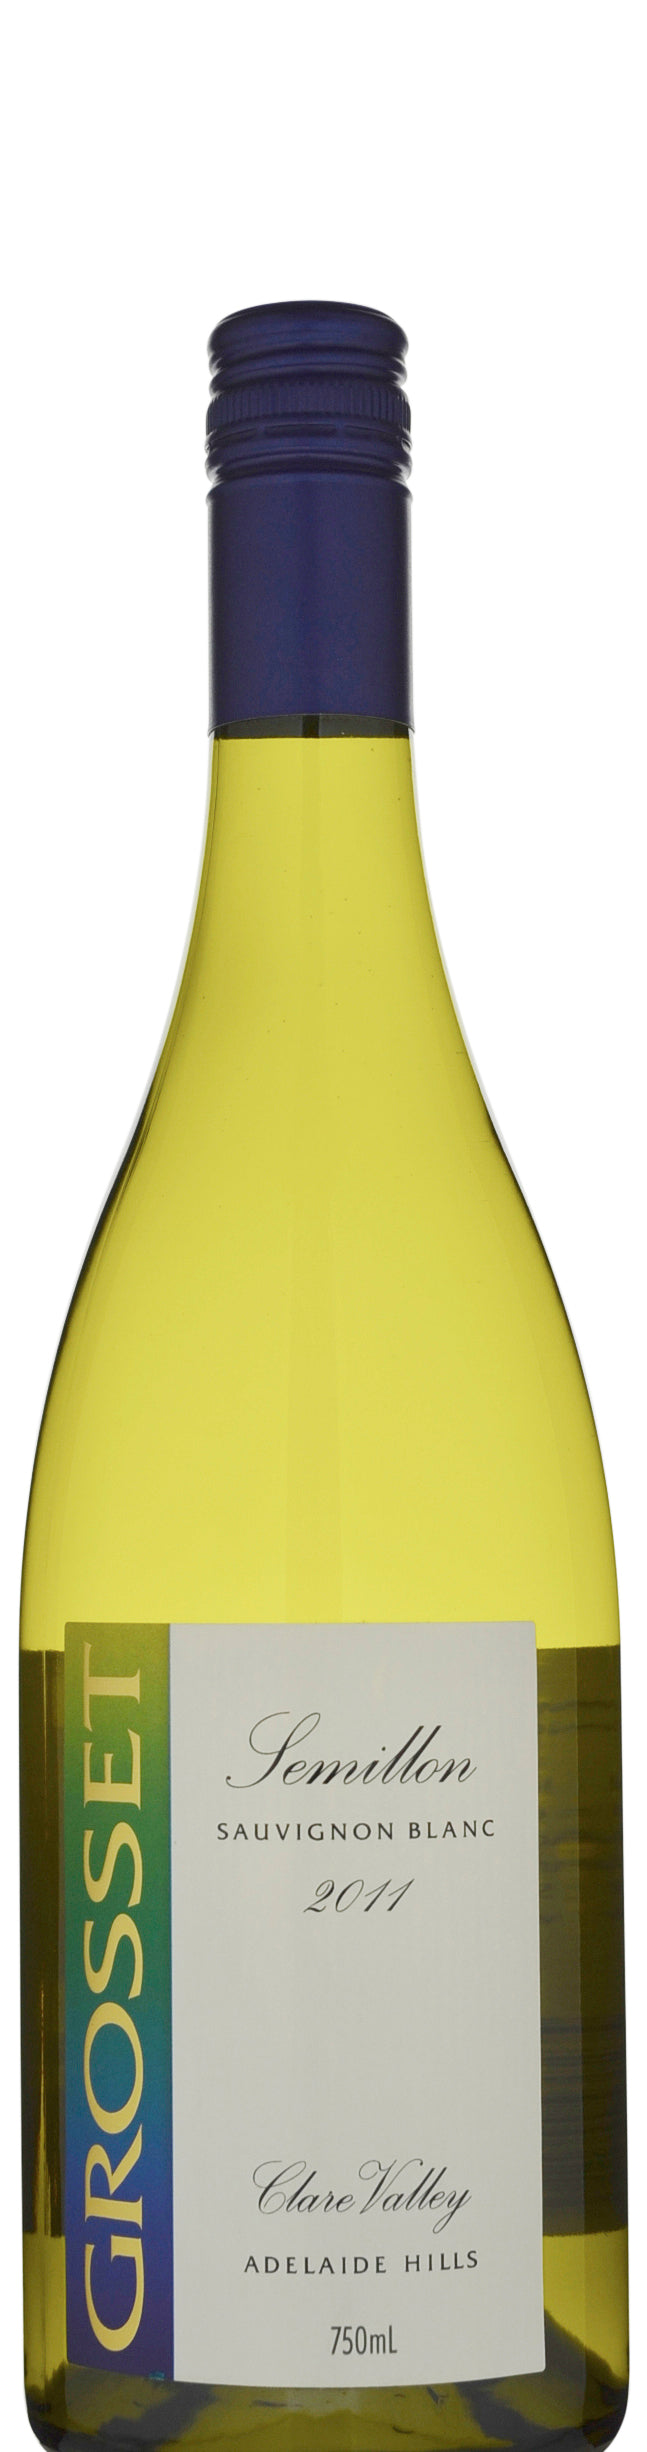 Grosset Semillon Sauvignon Blanc 2011